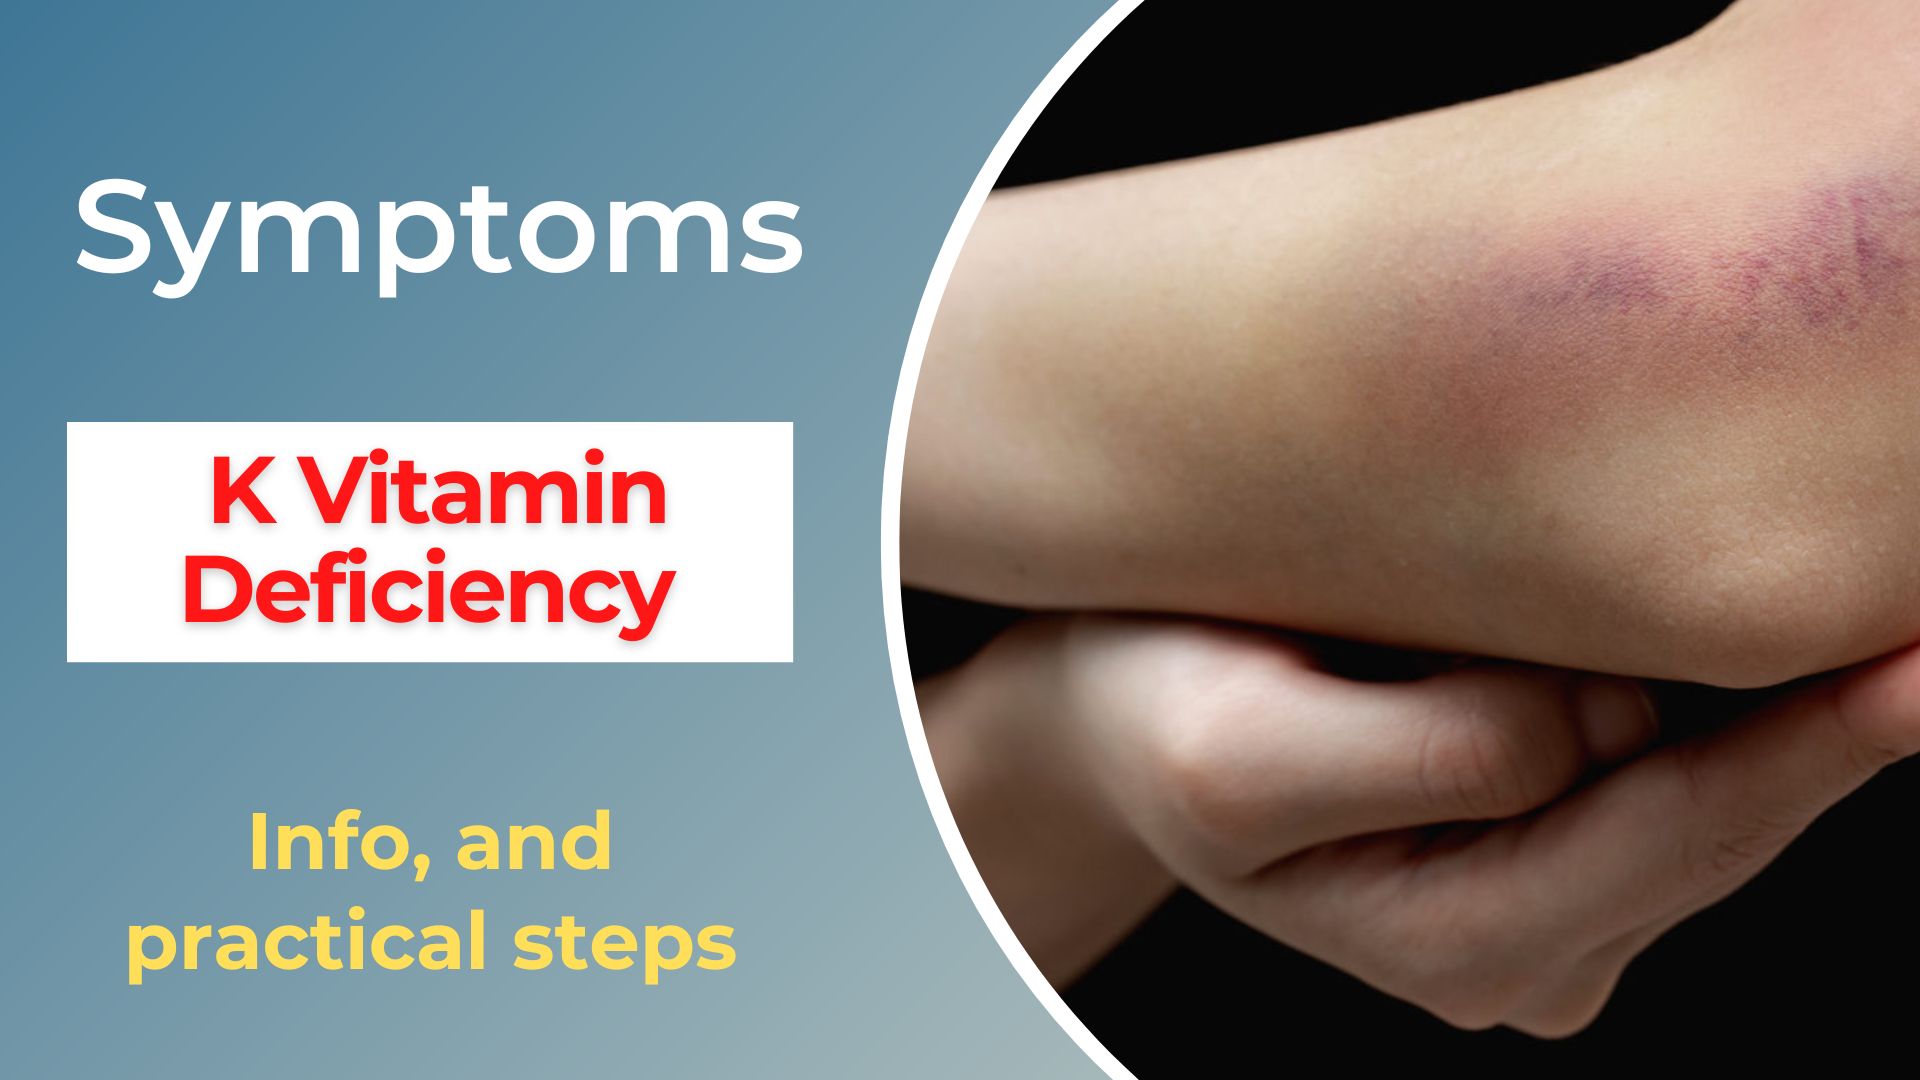 K Vitamin Deficiency Symptoms